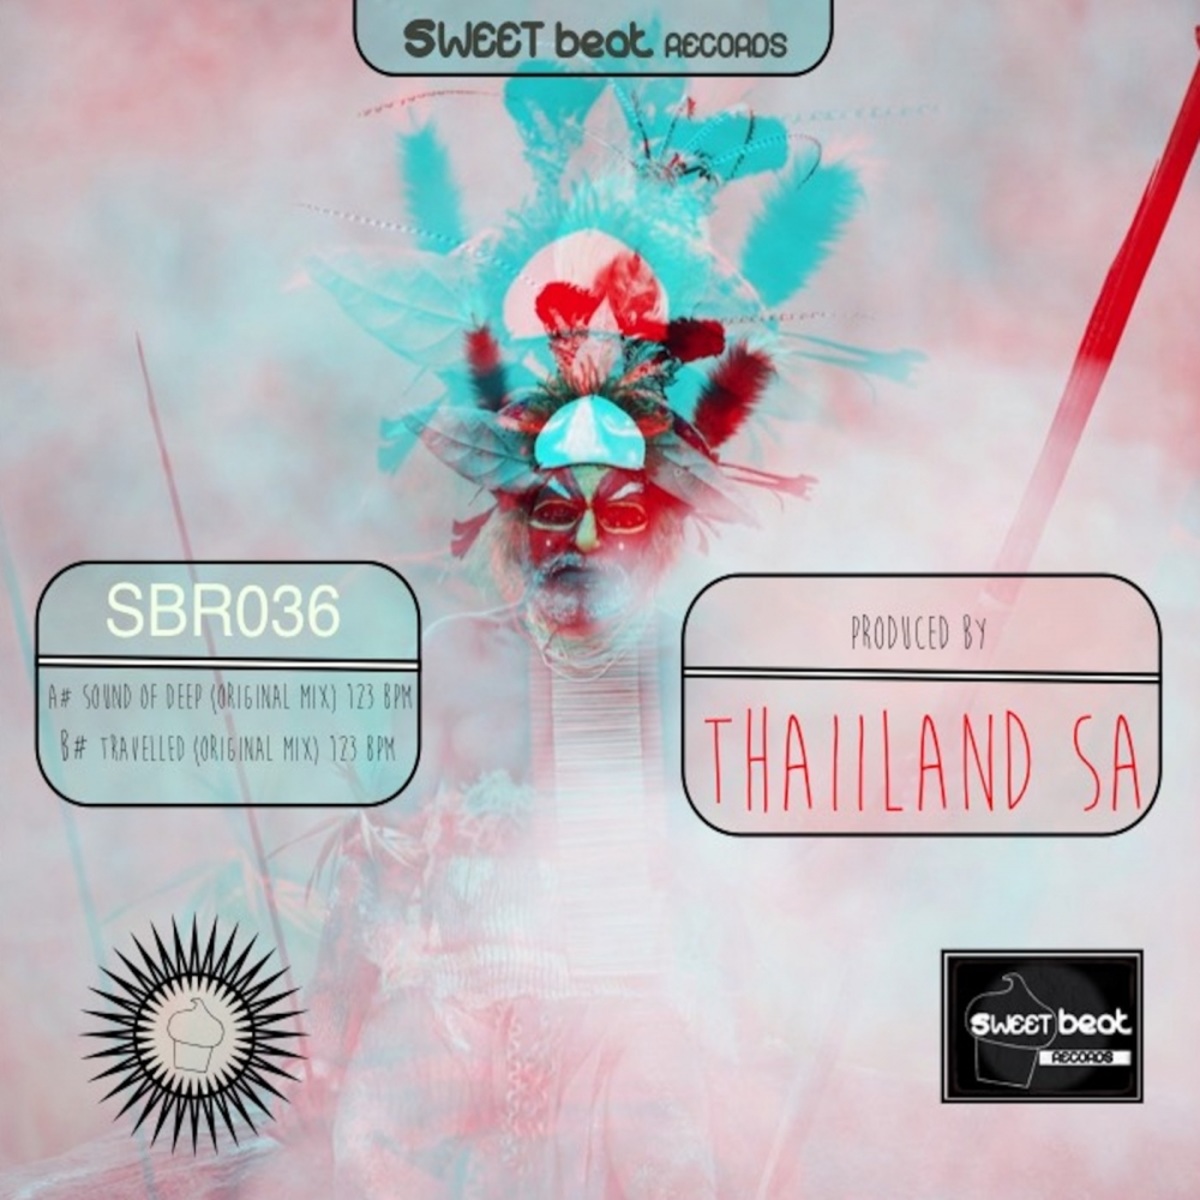 Thaiiland SA - Travelled / SWEET beat RECORDS